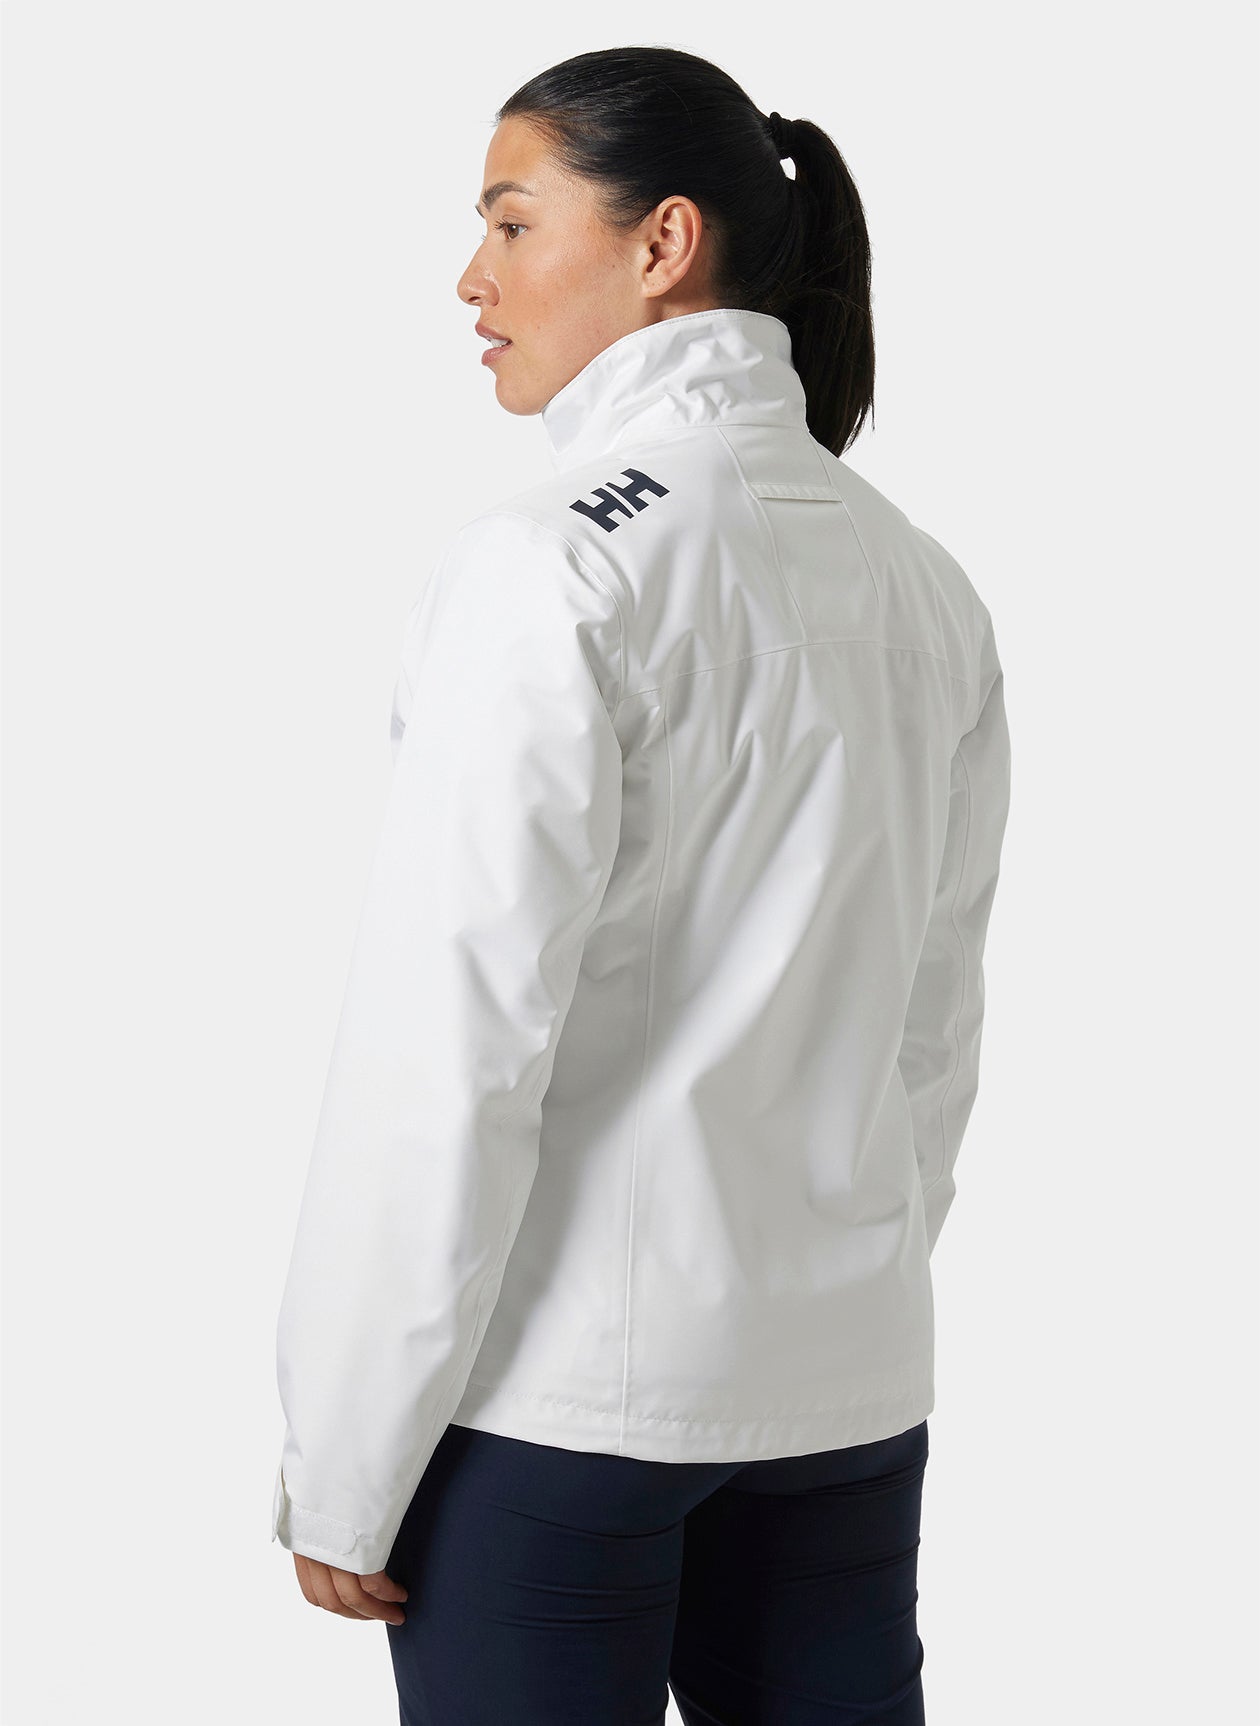 Helly Hansen Women's Midlayer Custom Crew Jackets, White